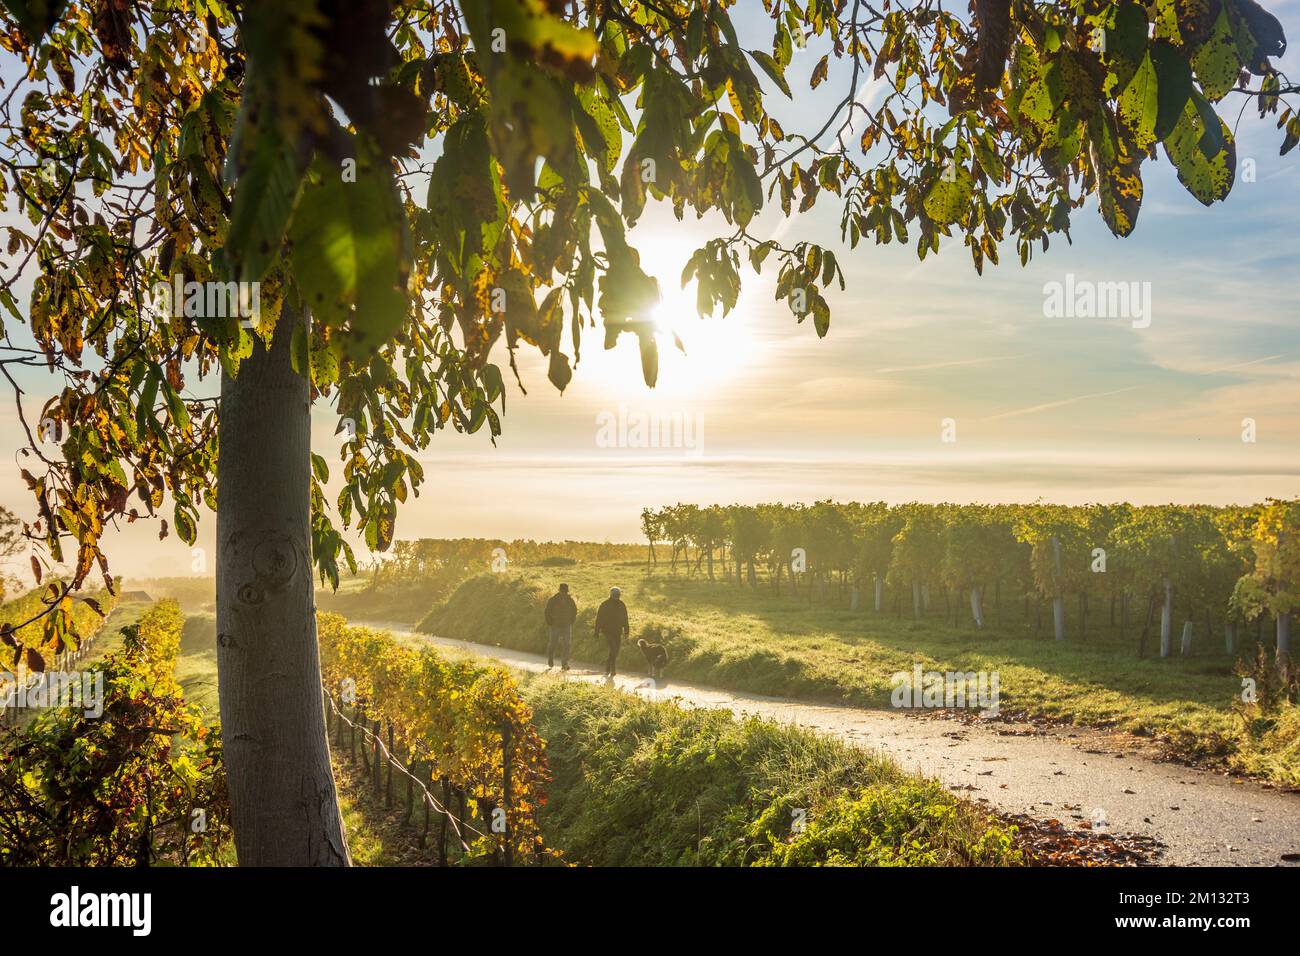 Traismauer, autumn colors, vineyards, wine-growing region of Traisental wine country, stroller, Lower Austria, Austria Stock Photo